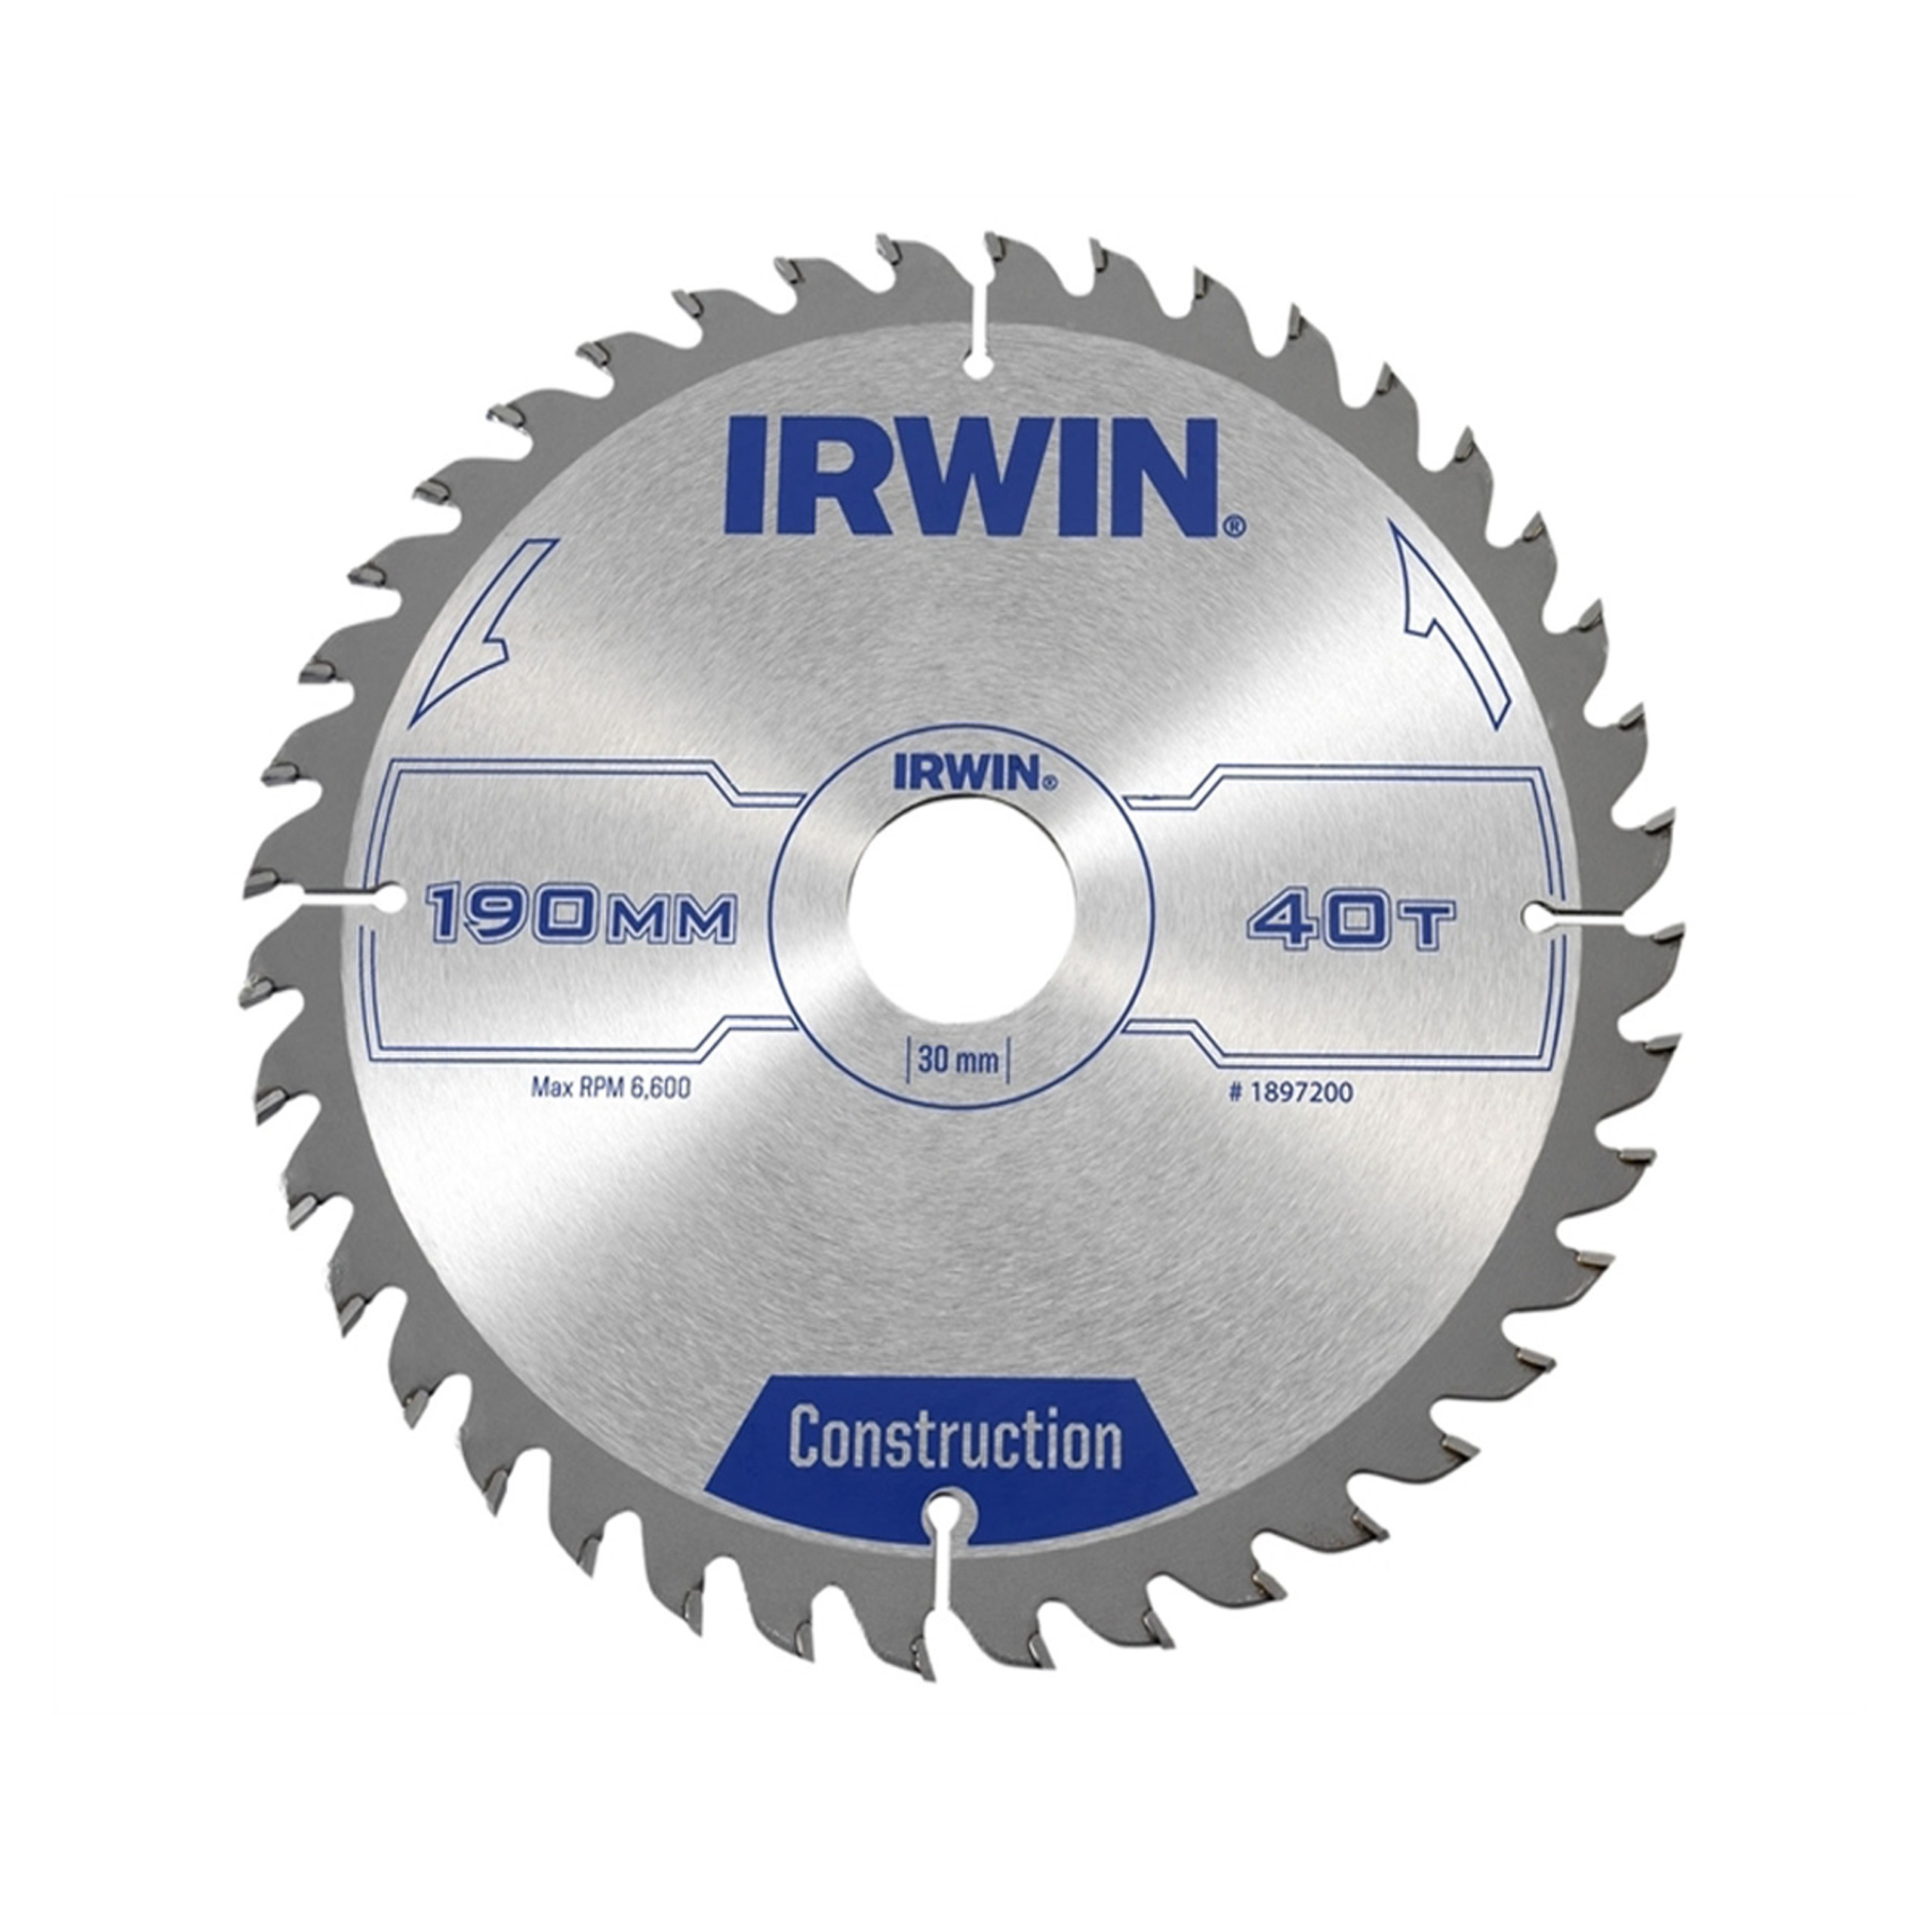 Irwin Construction Circular Saw Blade